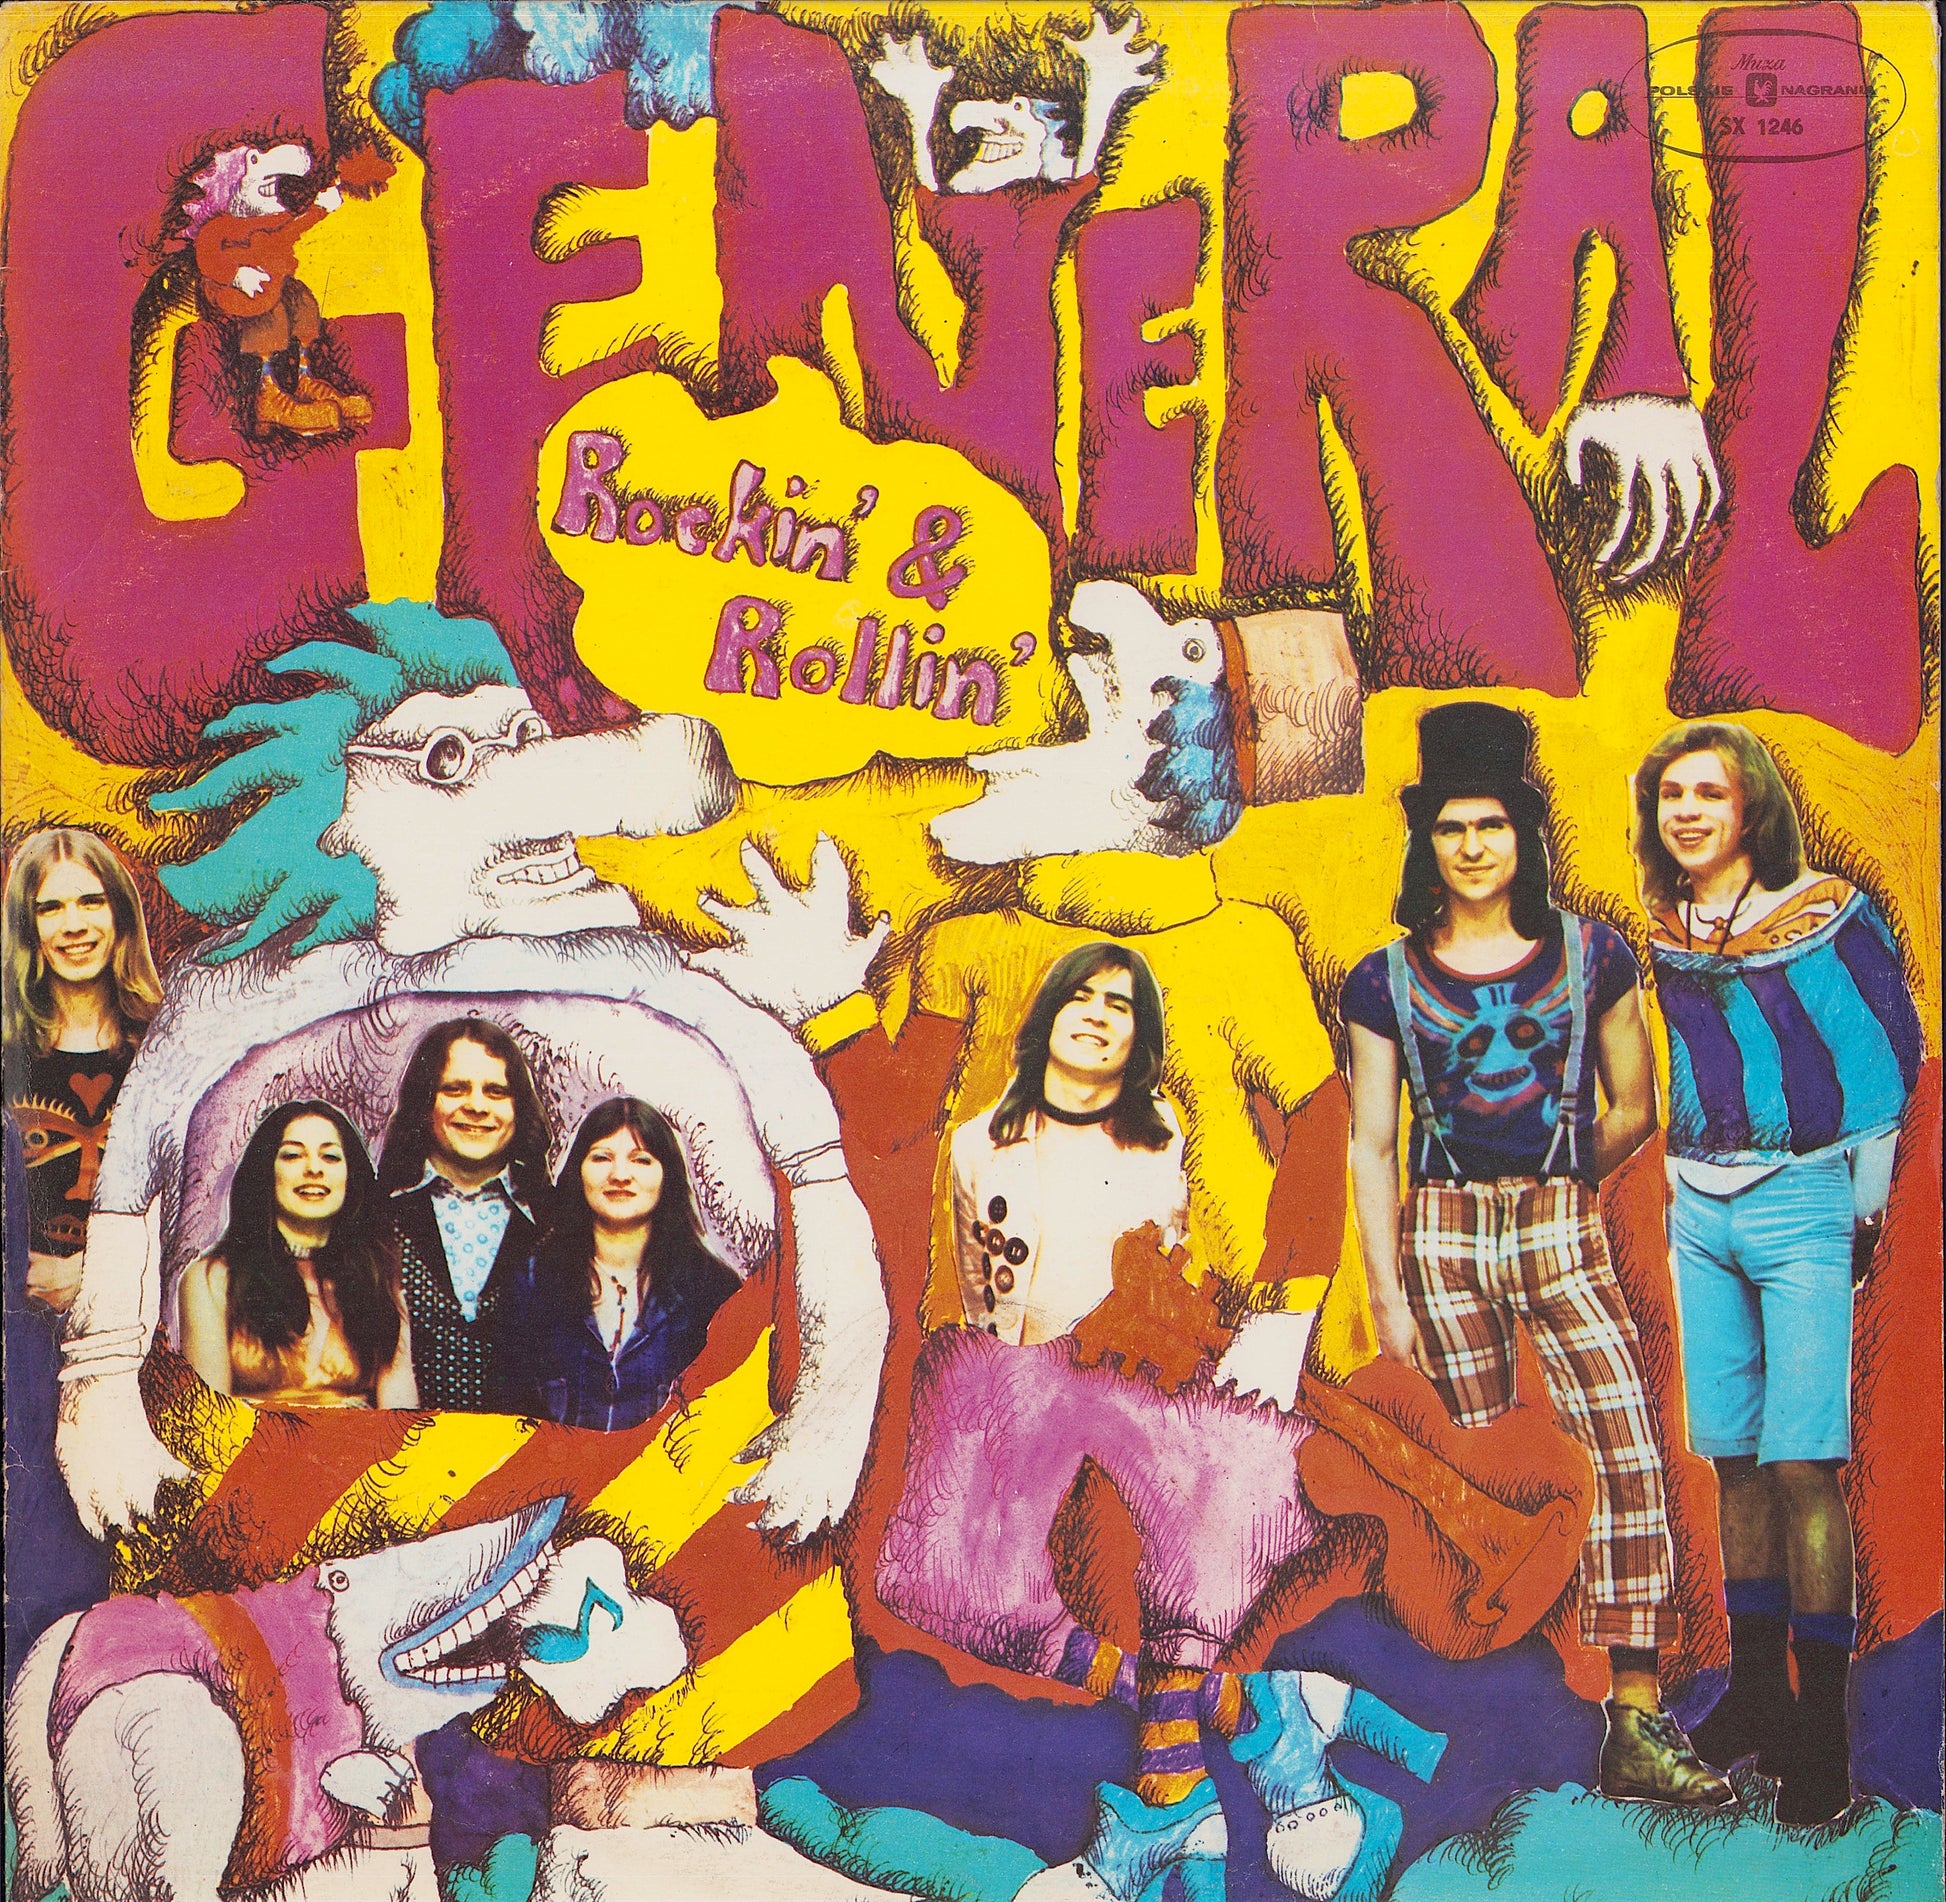 General - Rockin' & Rollin' Vinyl LP